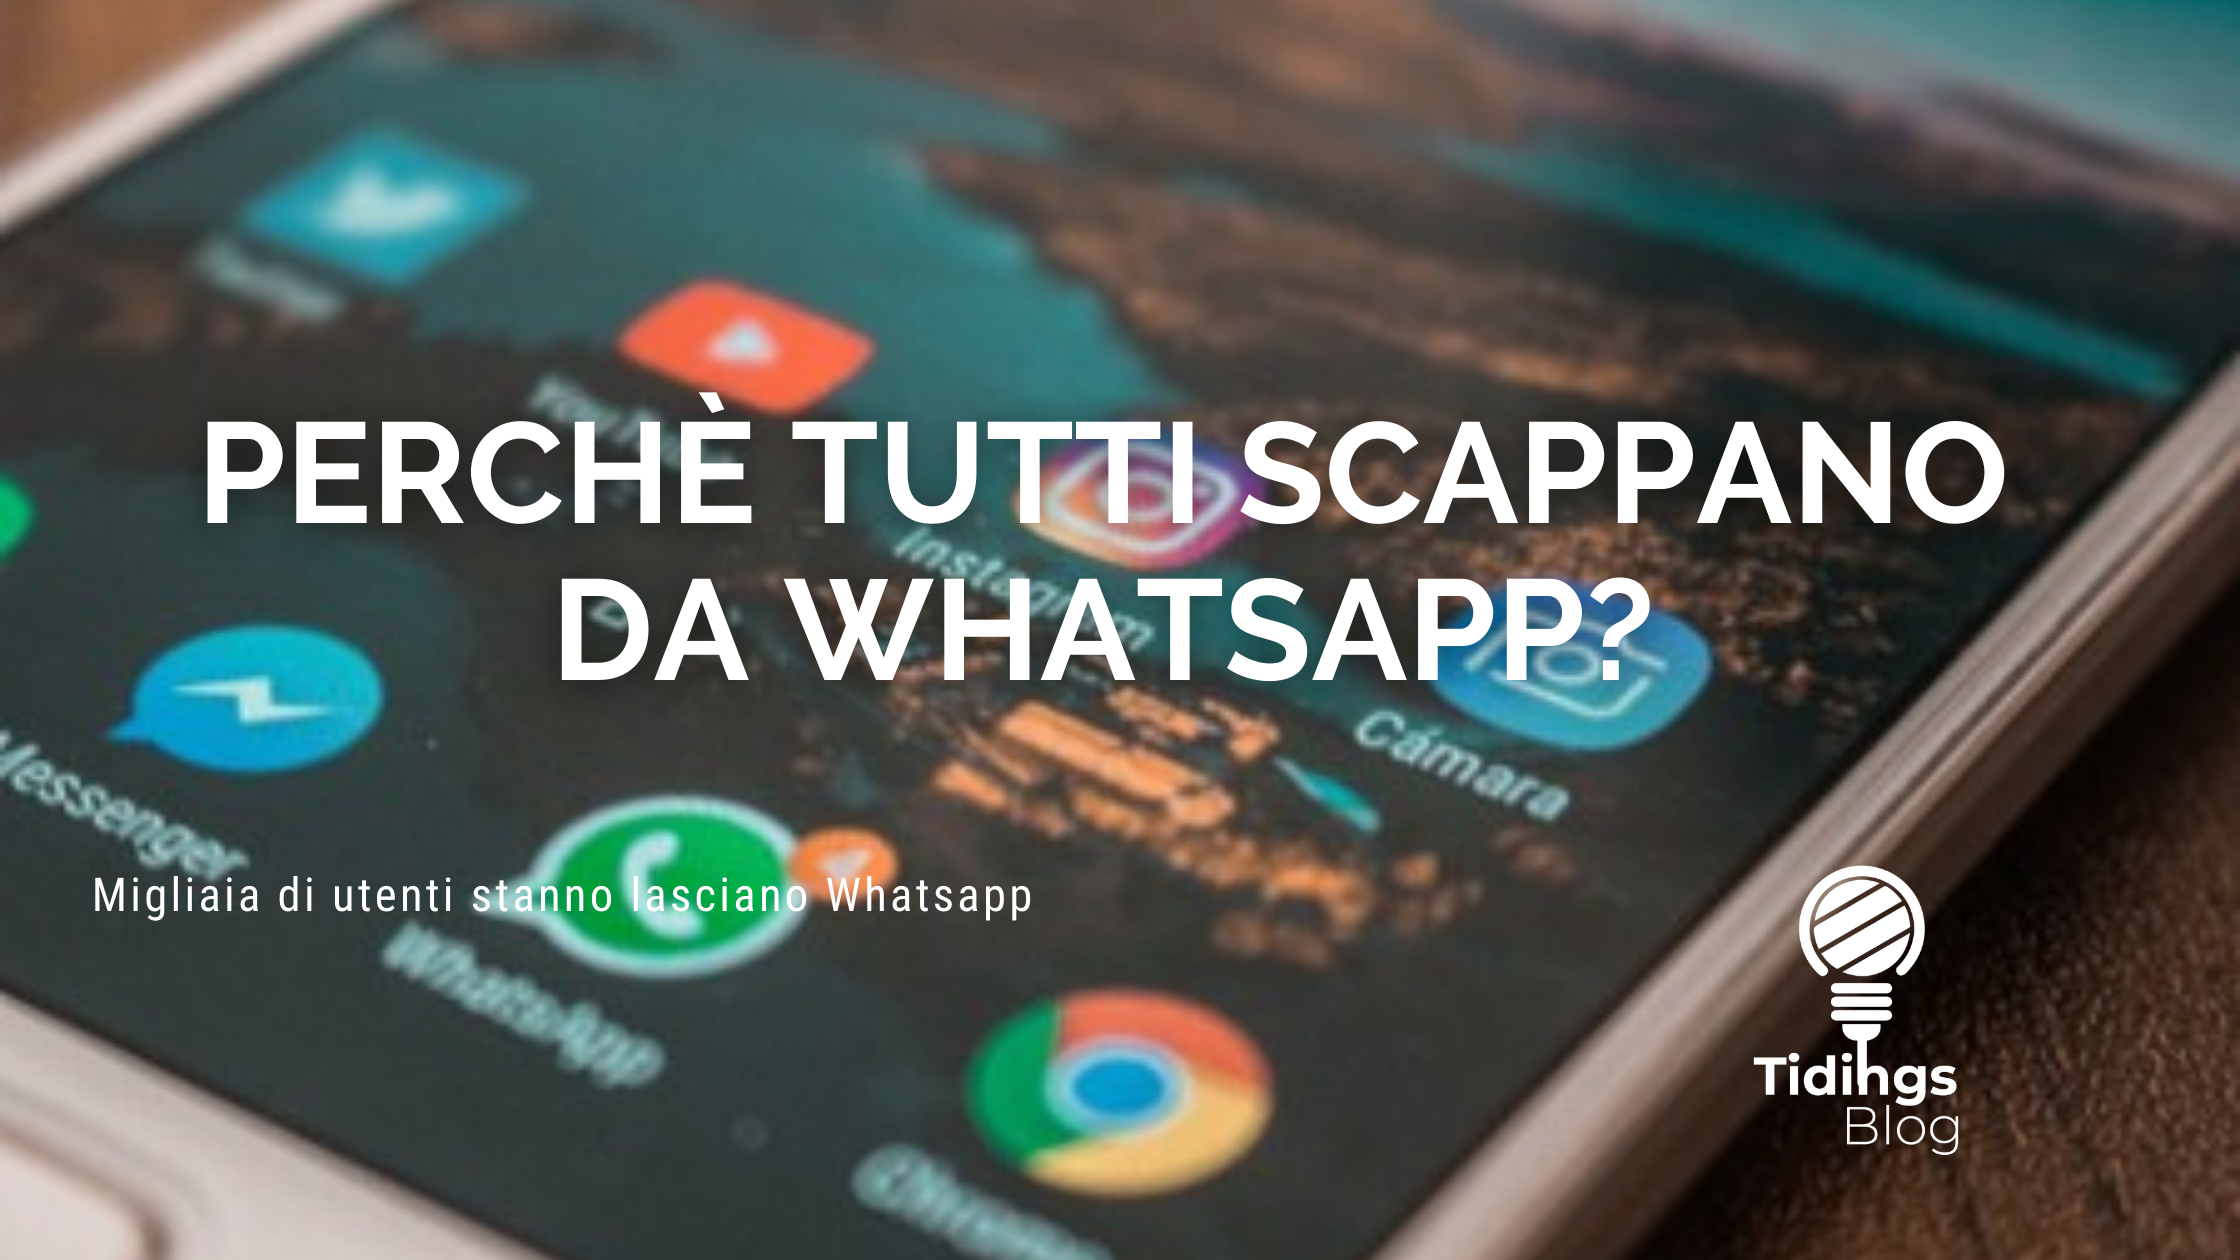 Perchè scappare da whatsapp?